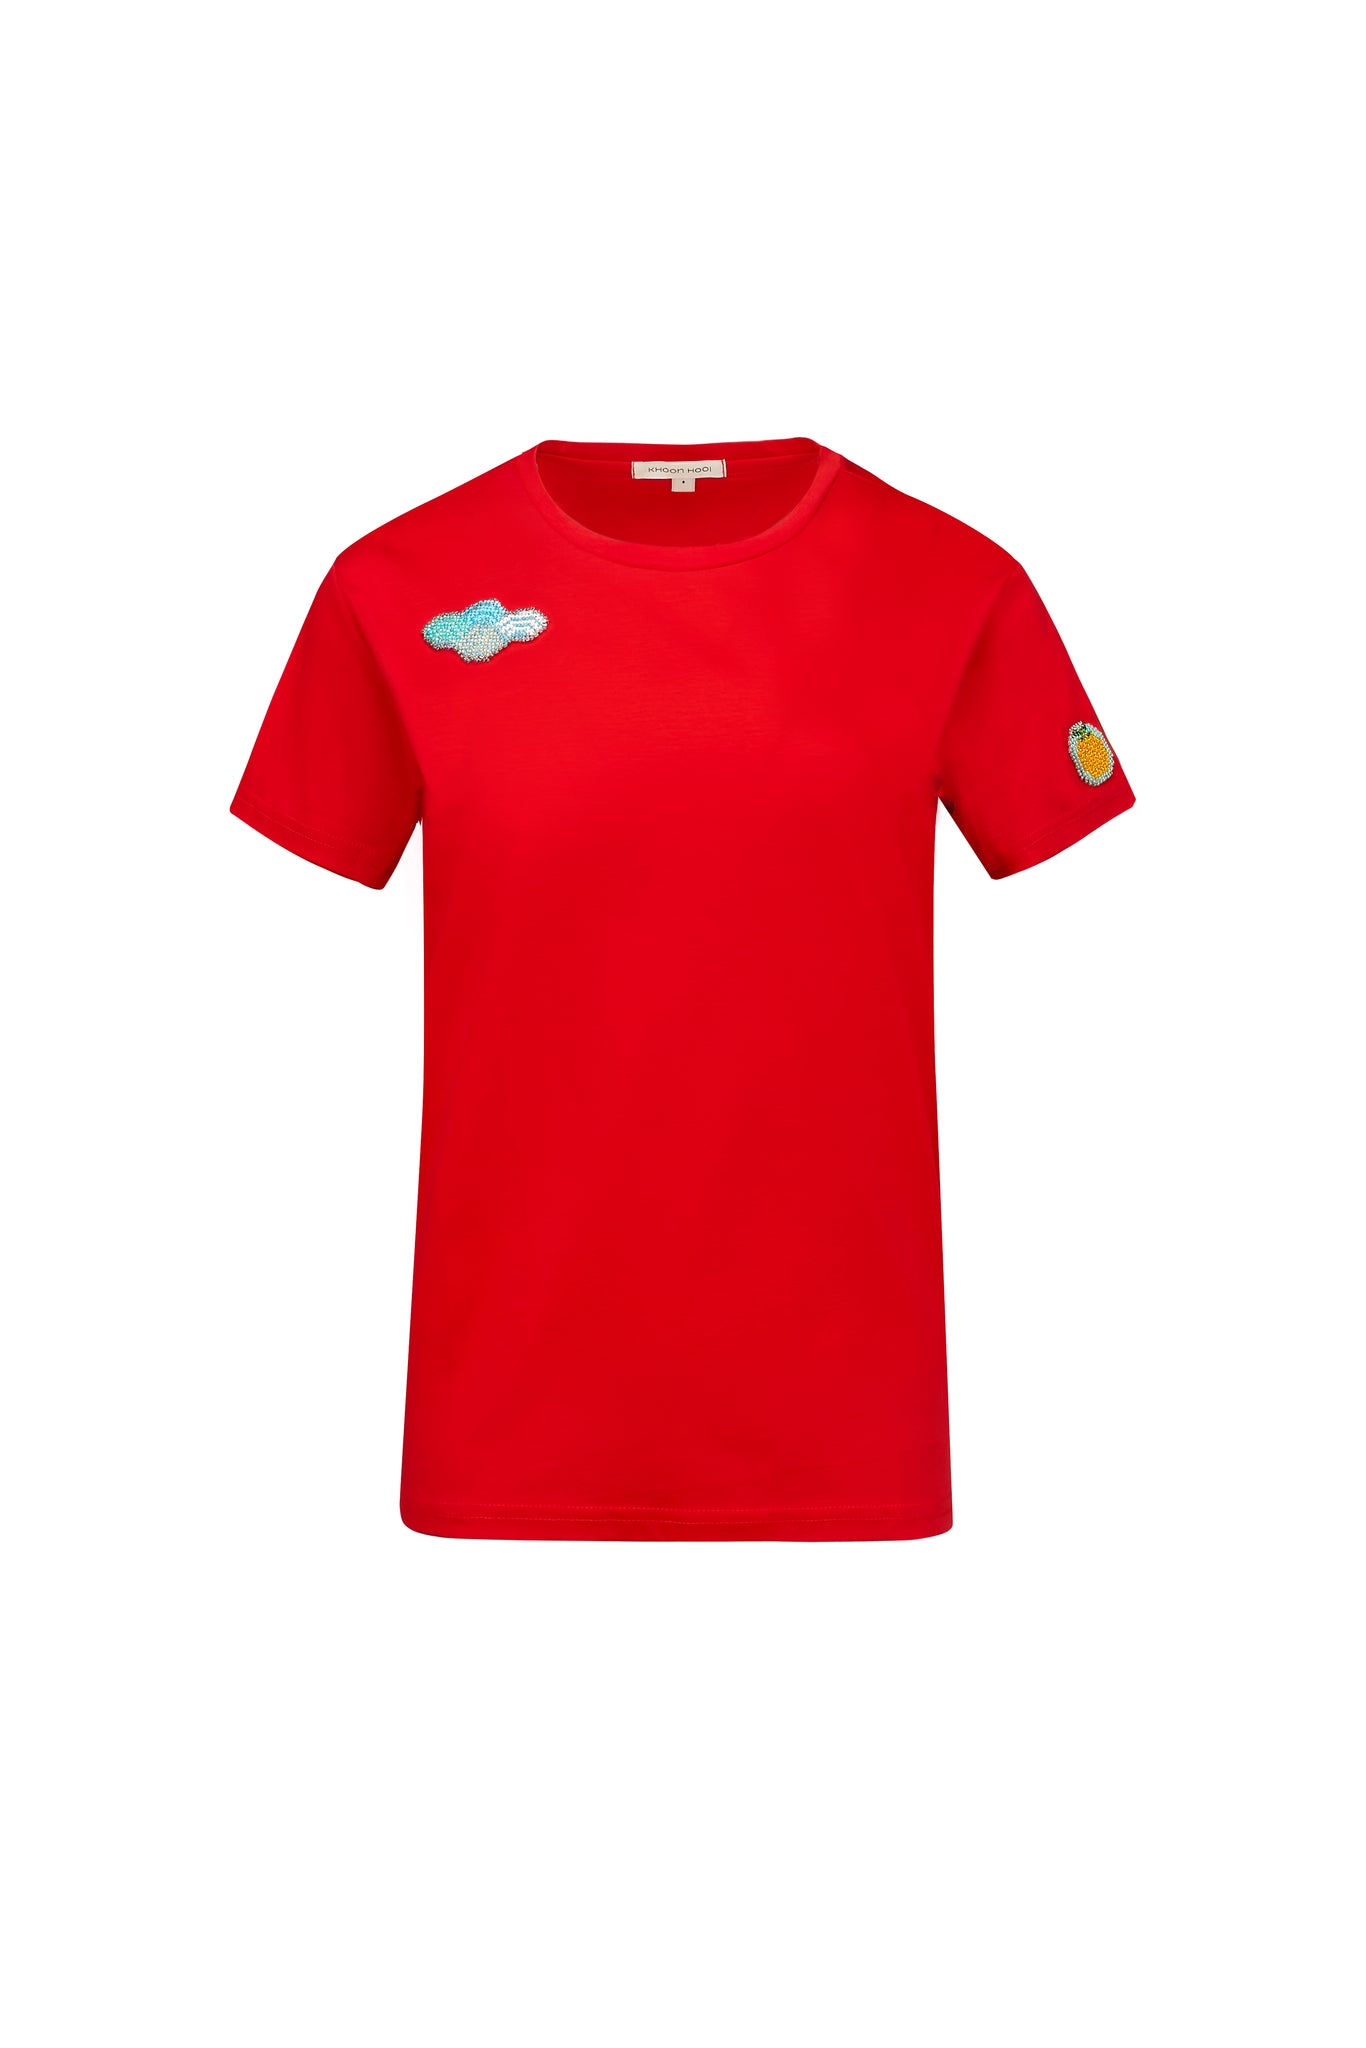 Dean T Shirt Clara in Crimson